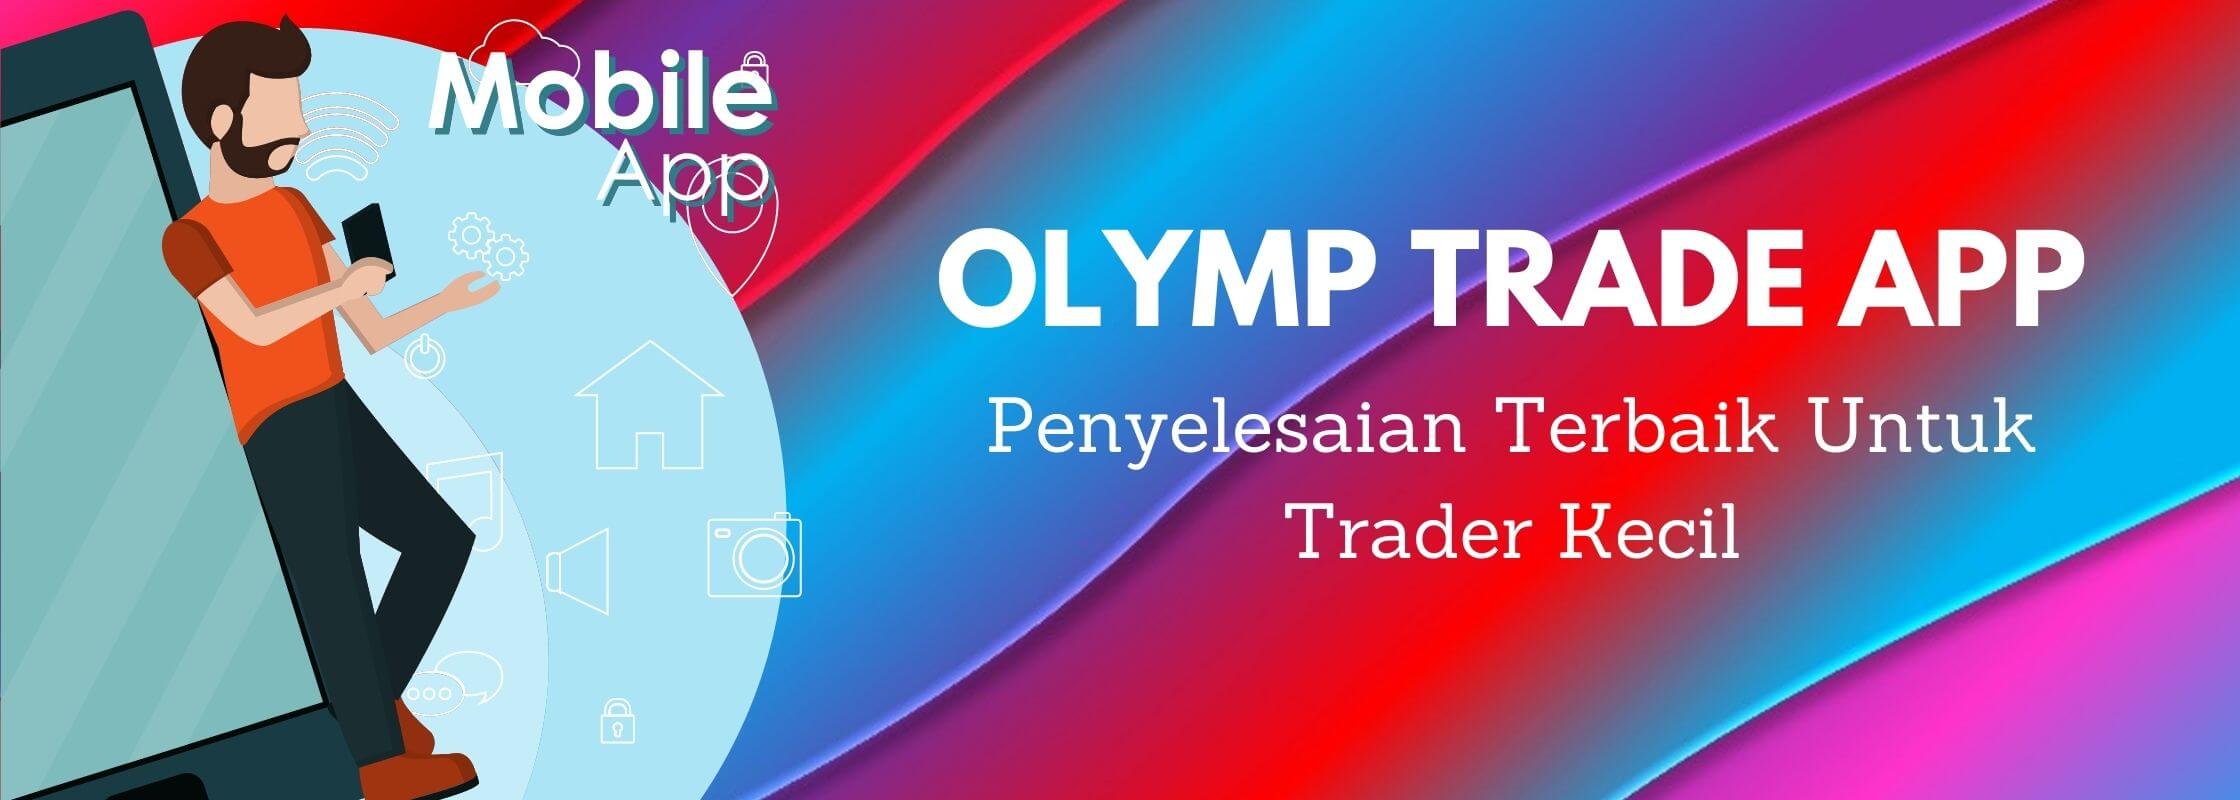 olymp trade app